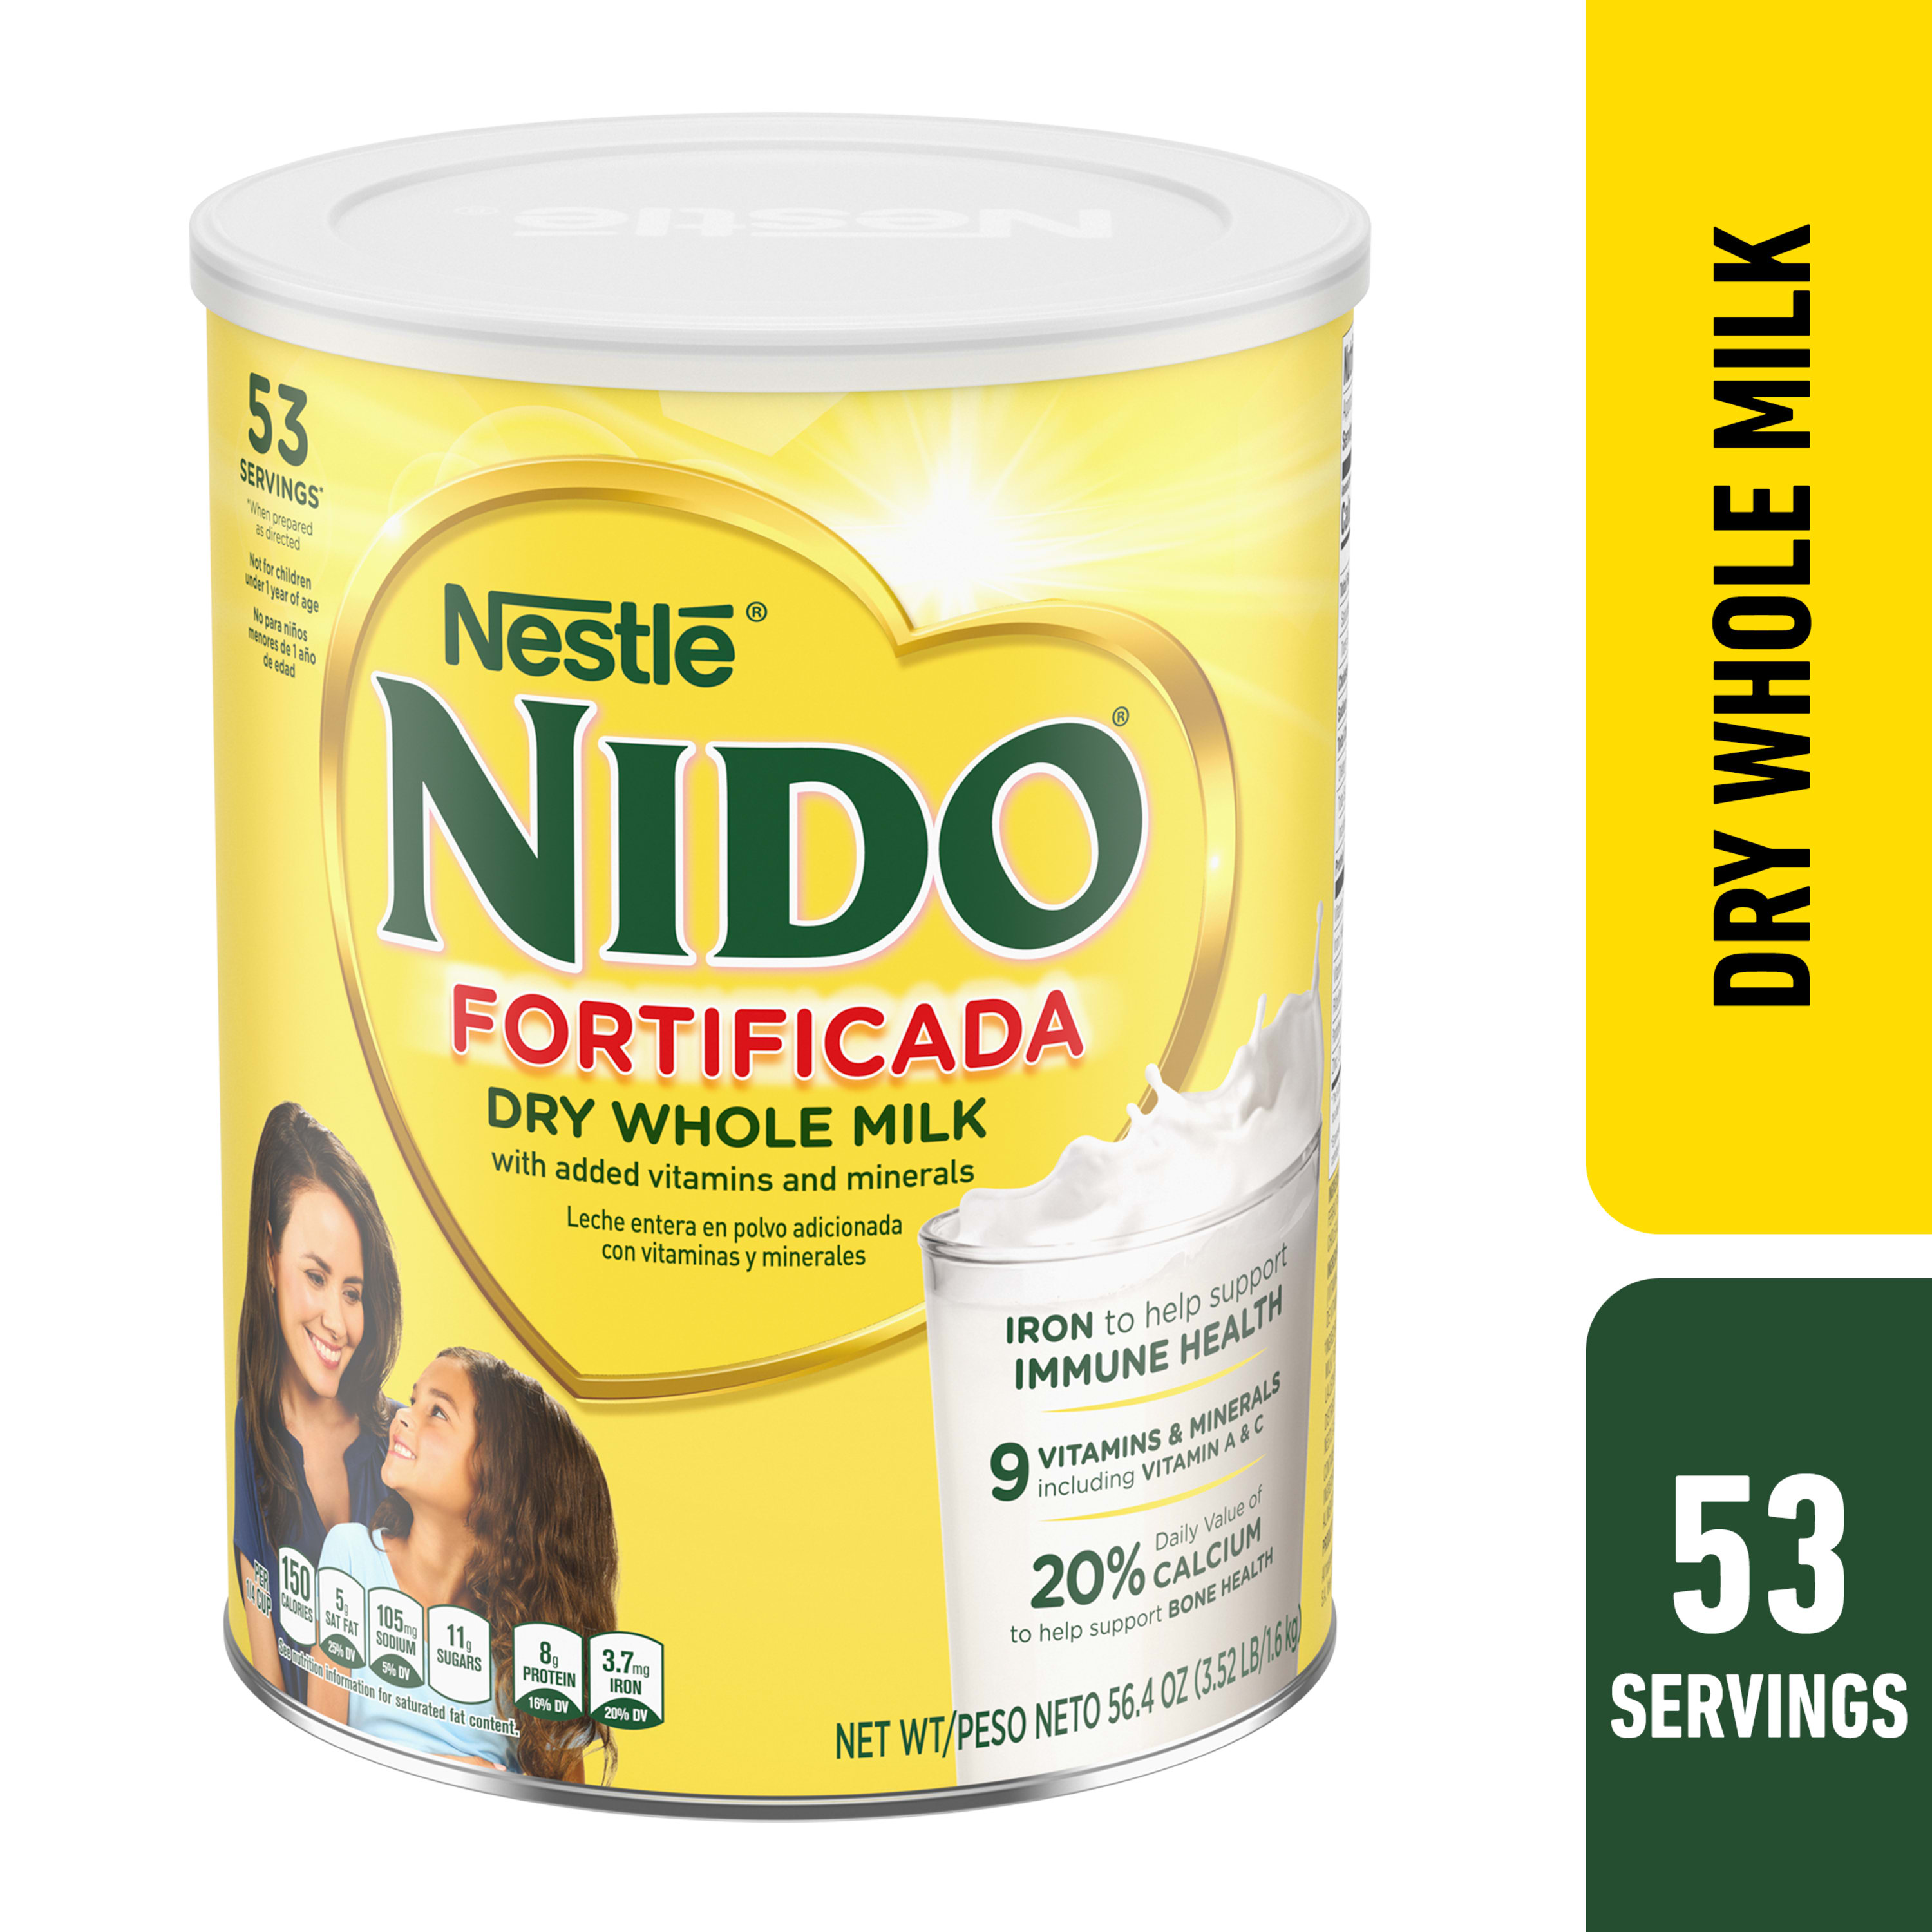 Nestle Nido Fortificada Powdered Drink Mix, Dry Whole Milk Powder, 56.4 oz - image 1 of 13